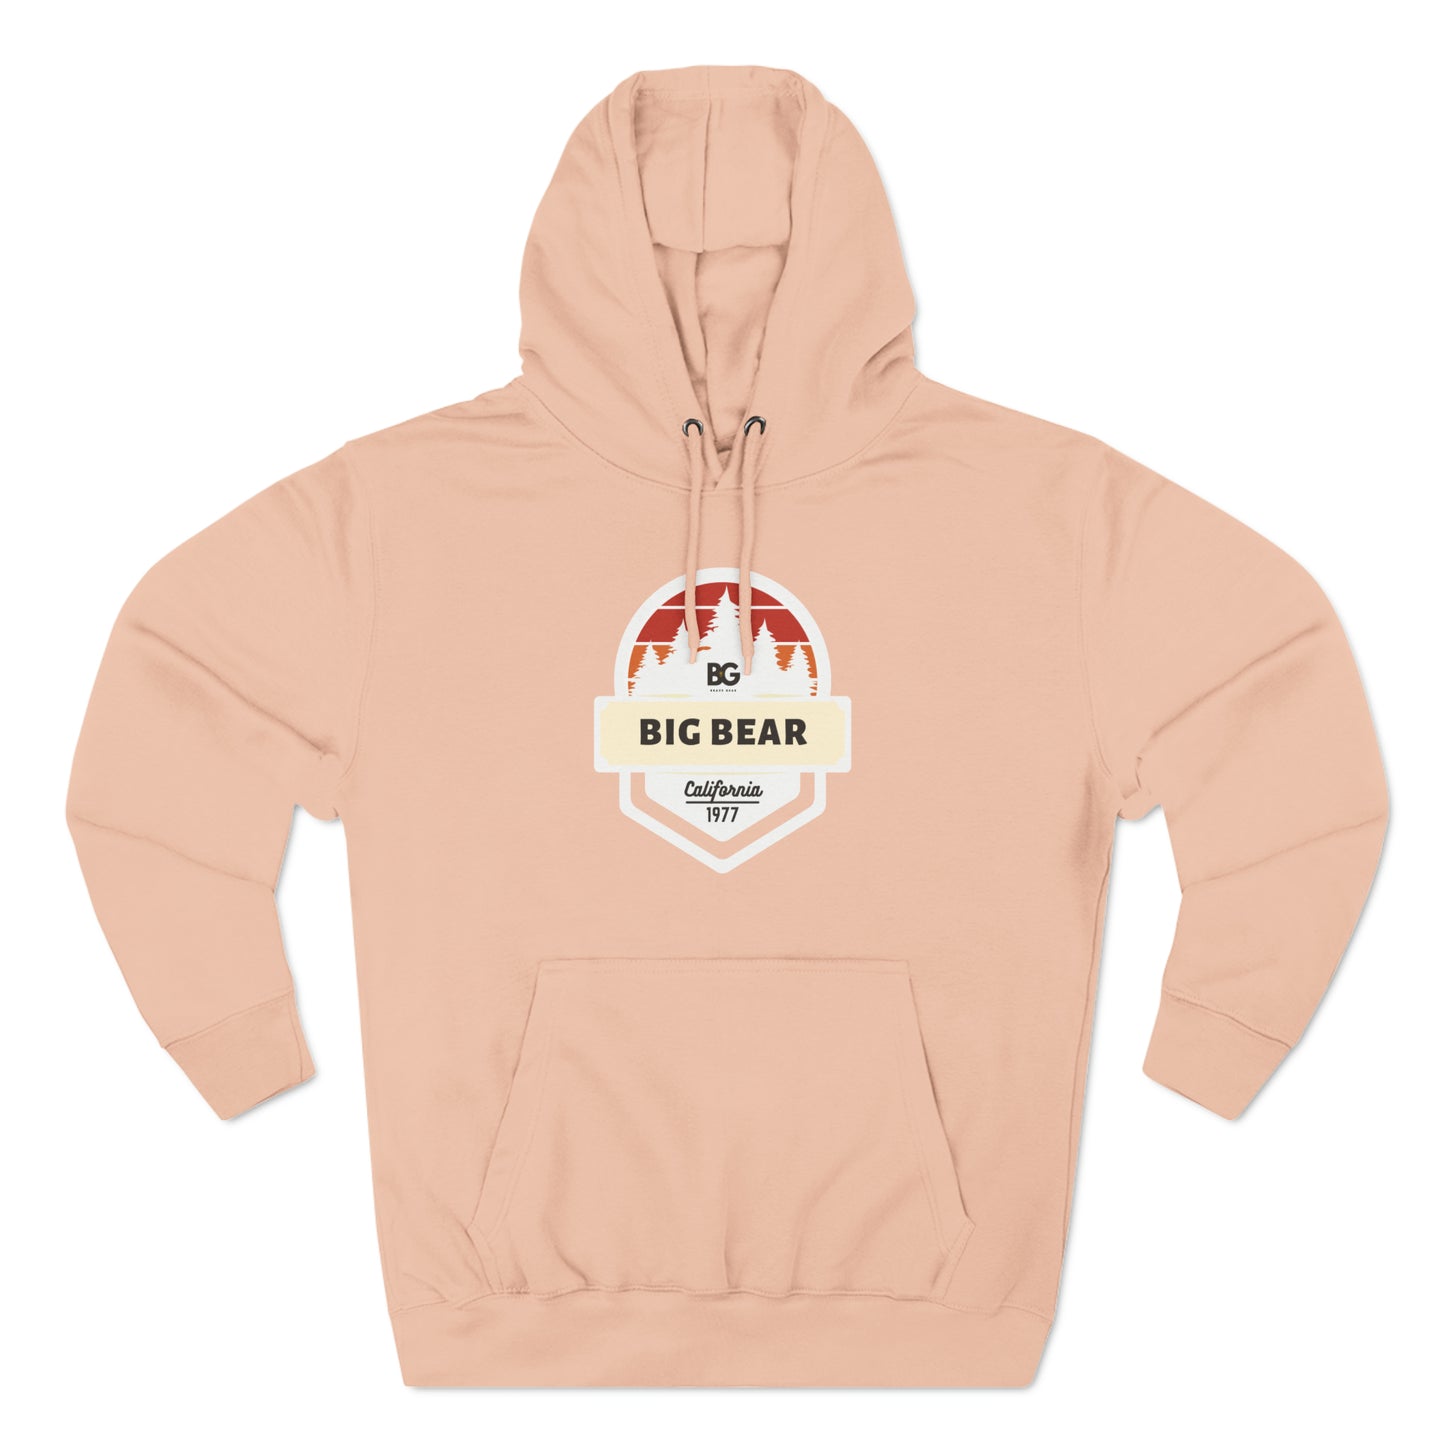 BG "Big Bear California" Premium Pullover Hoodie